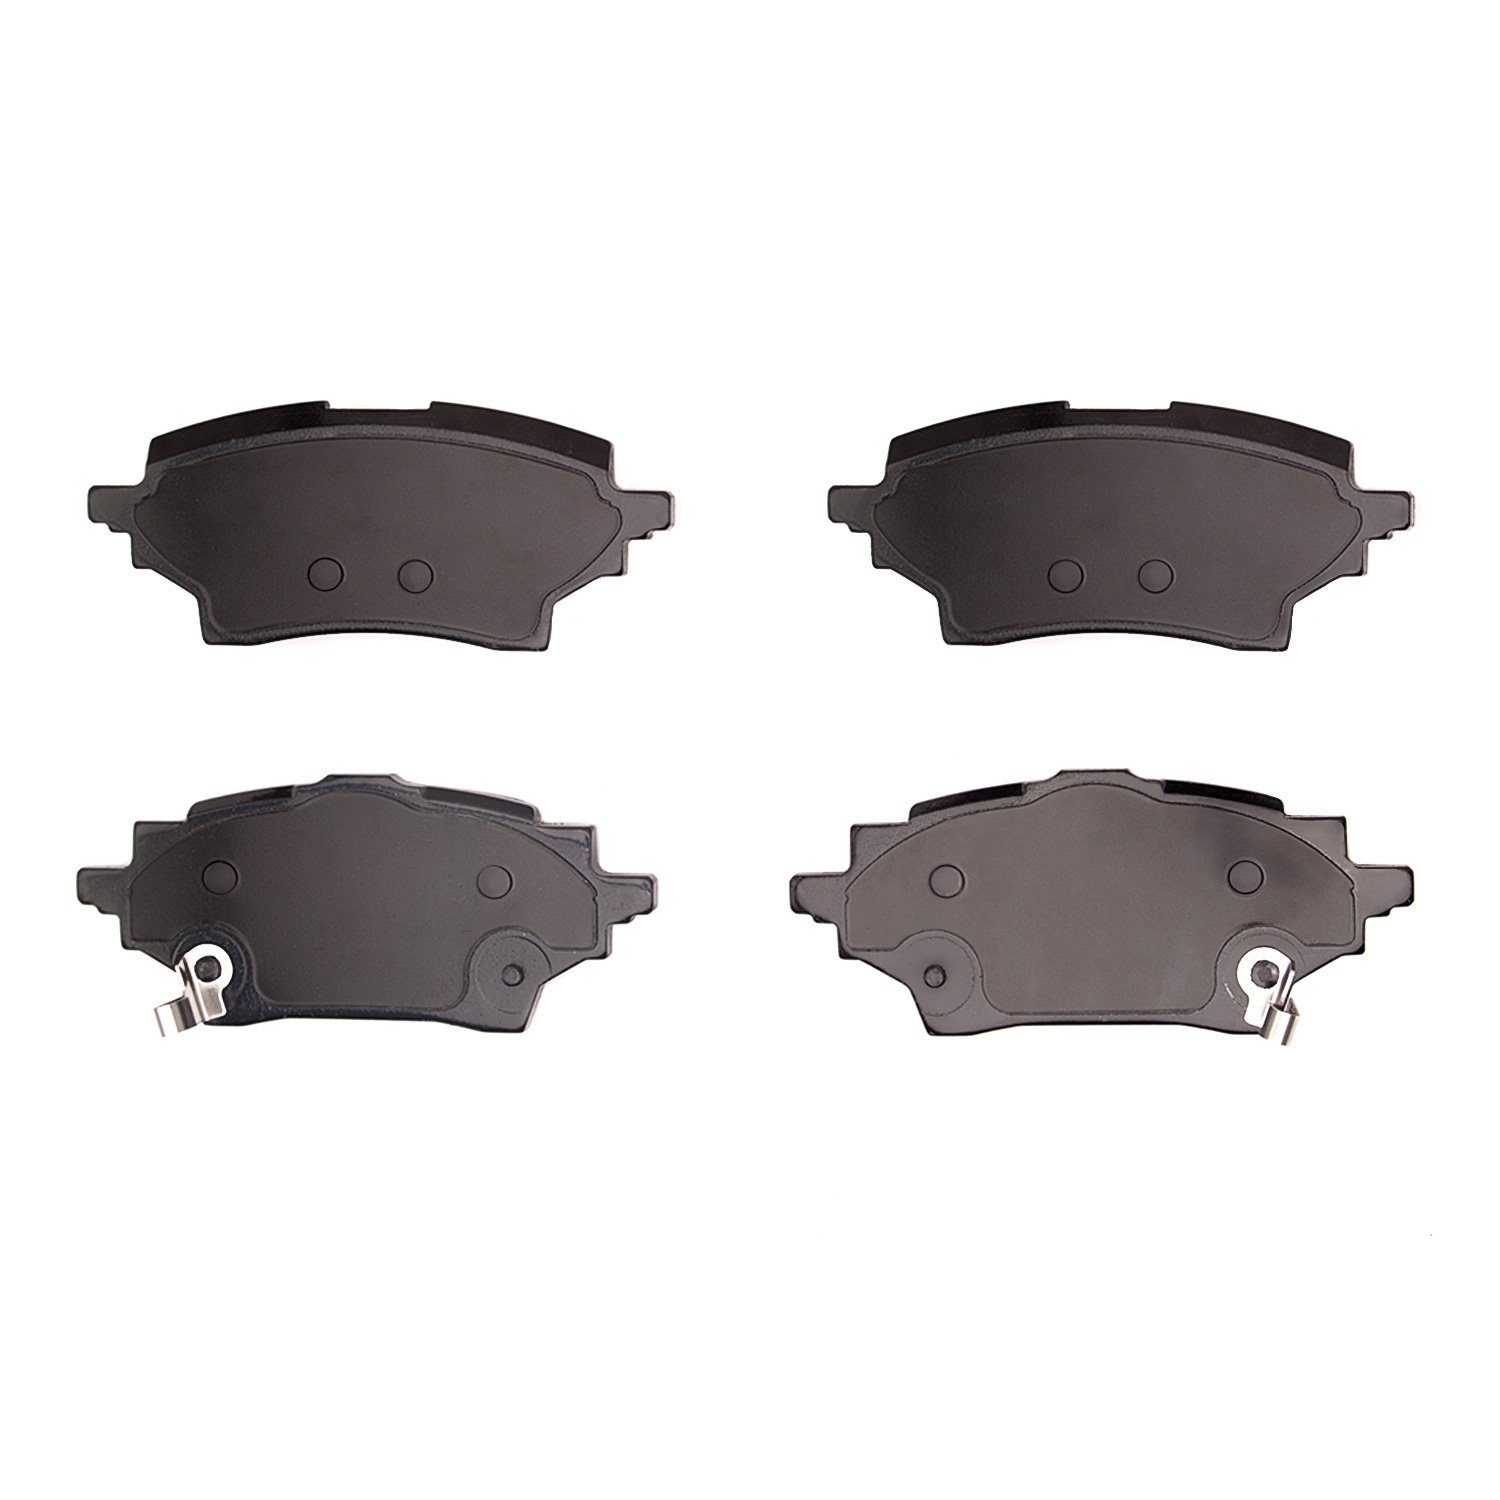 1310-2202-00 3000-Series Ceramic Brake Pads, Fits Select Lexus/Toyota/Scion, Position: Rear